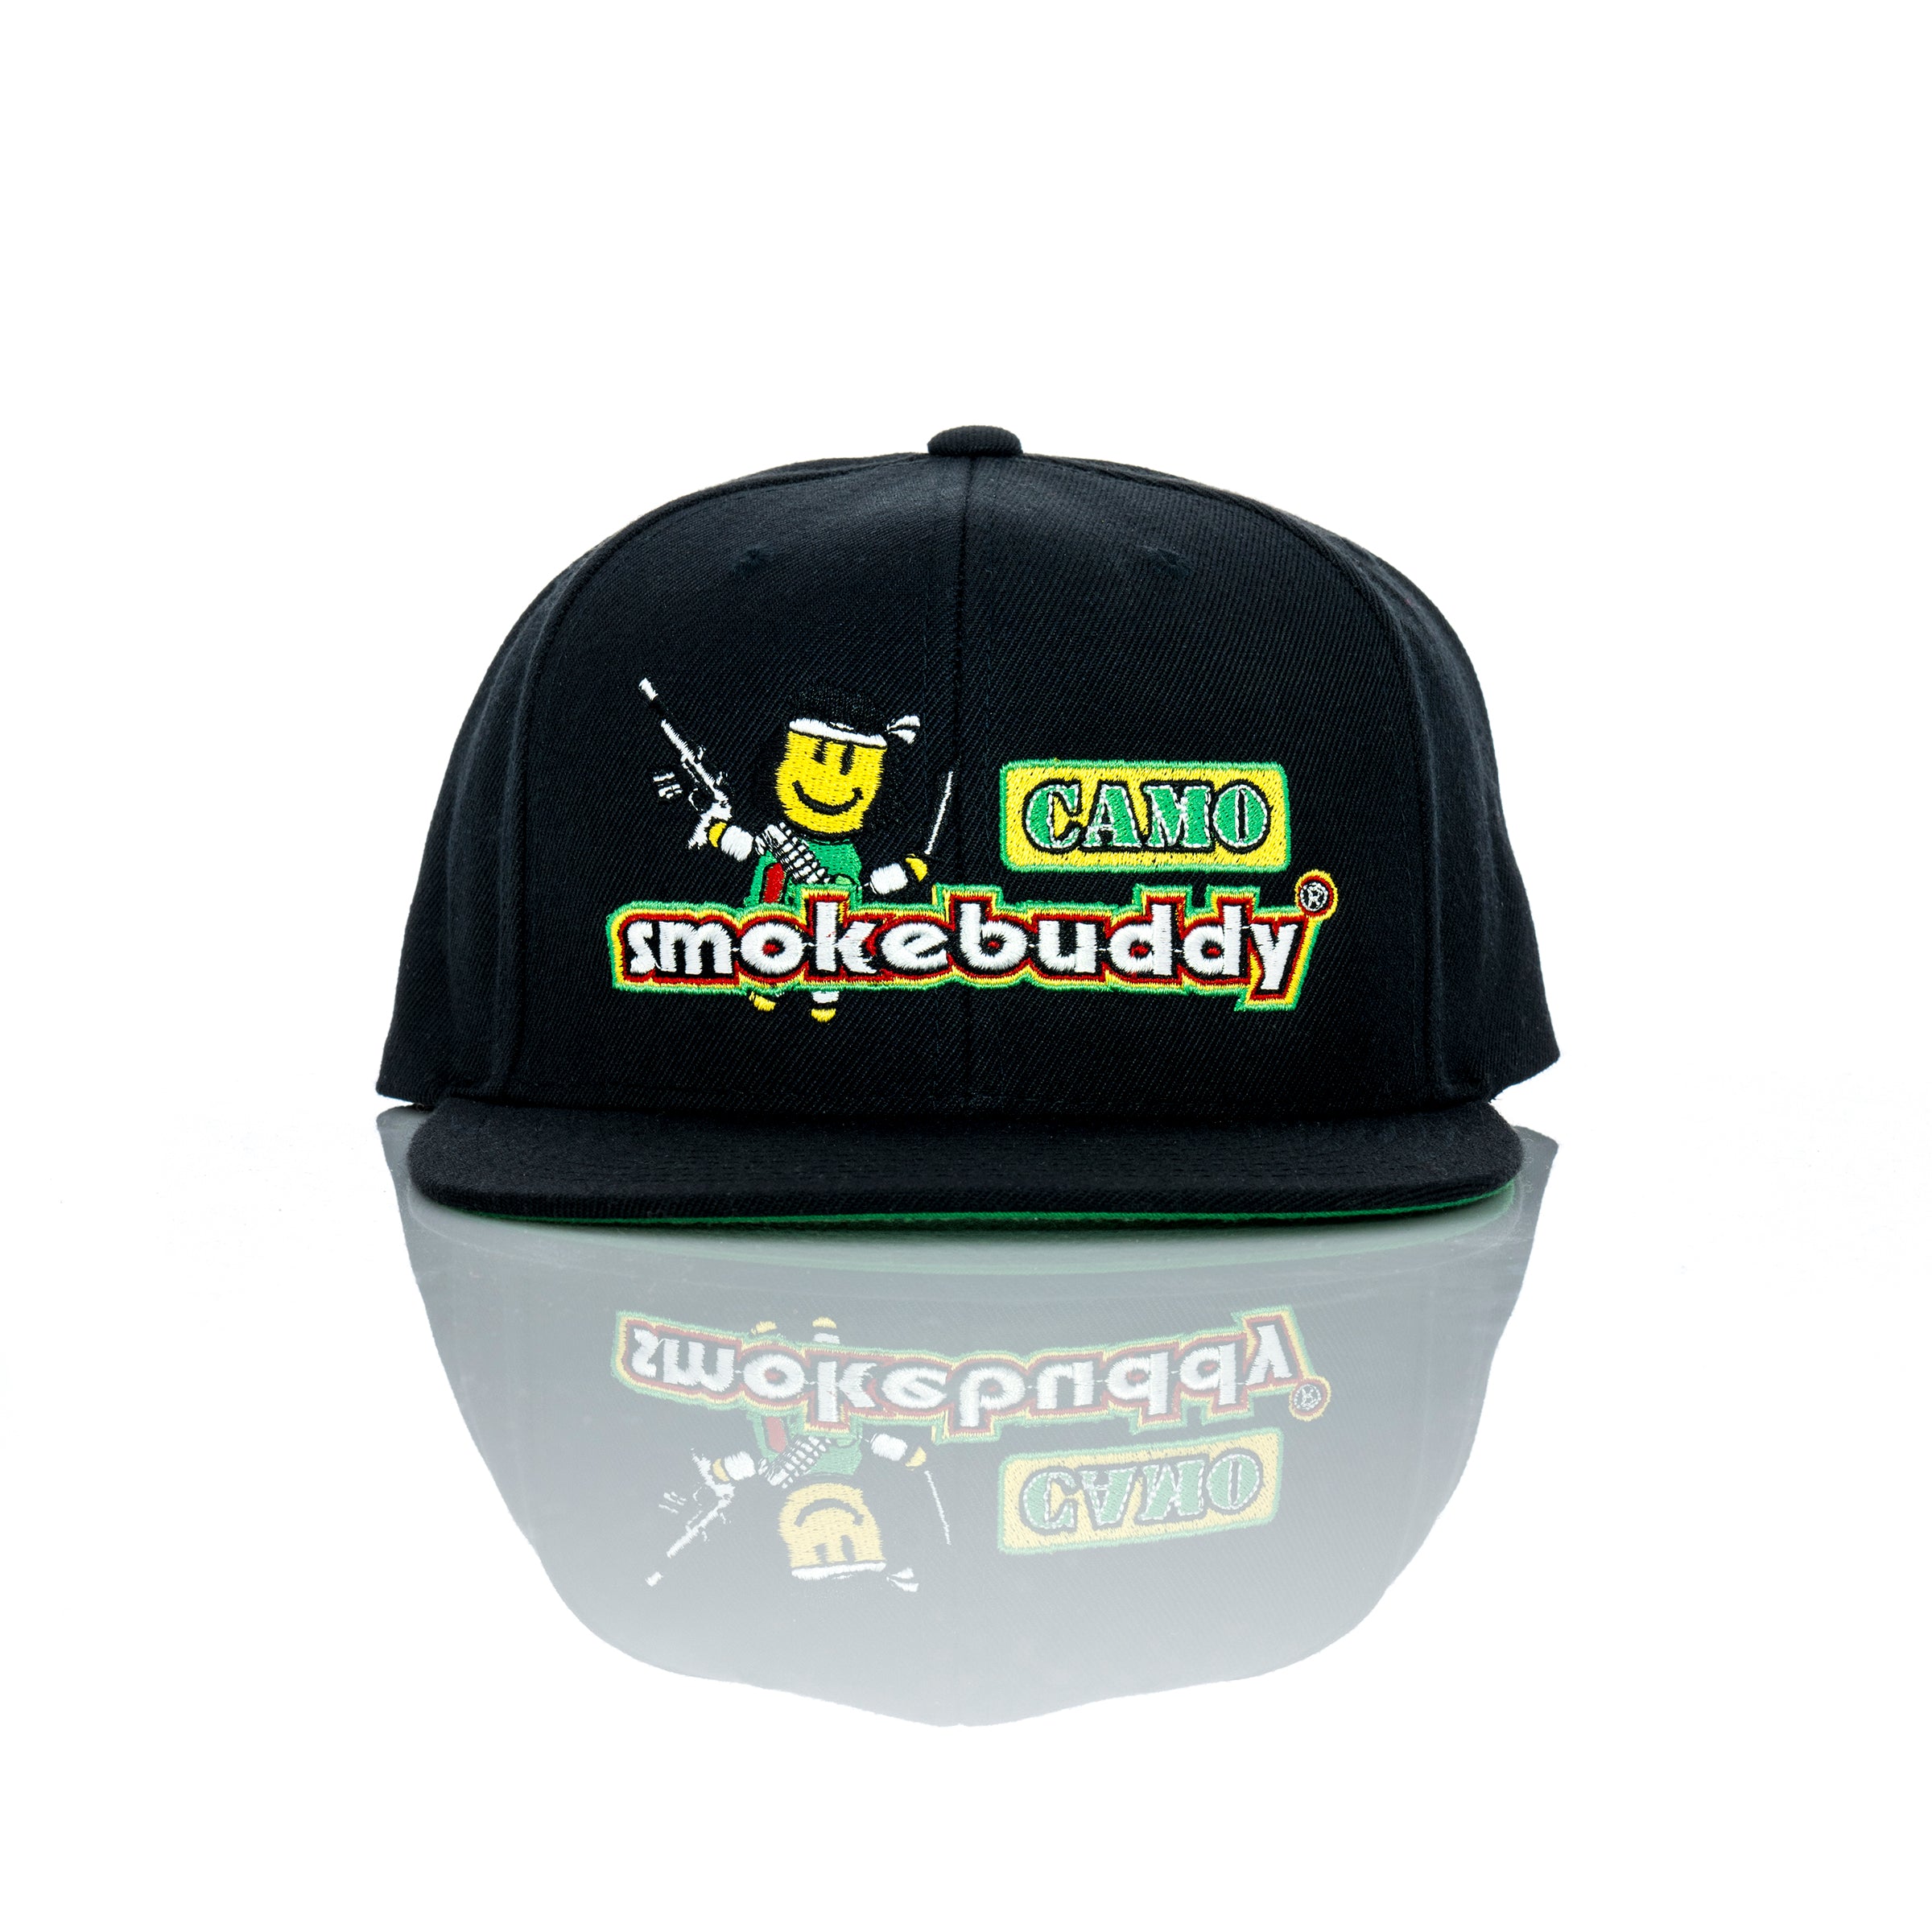 Smokebuddy Camo Snapback Hat Black